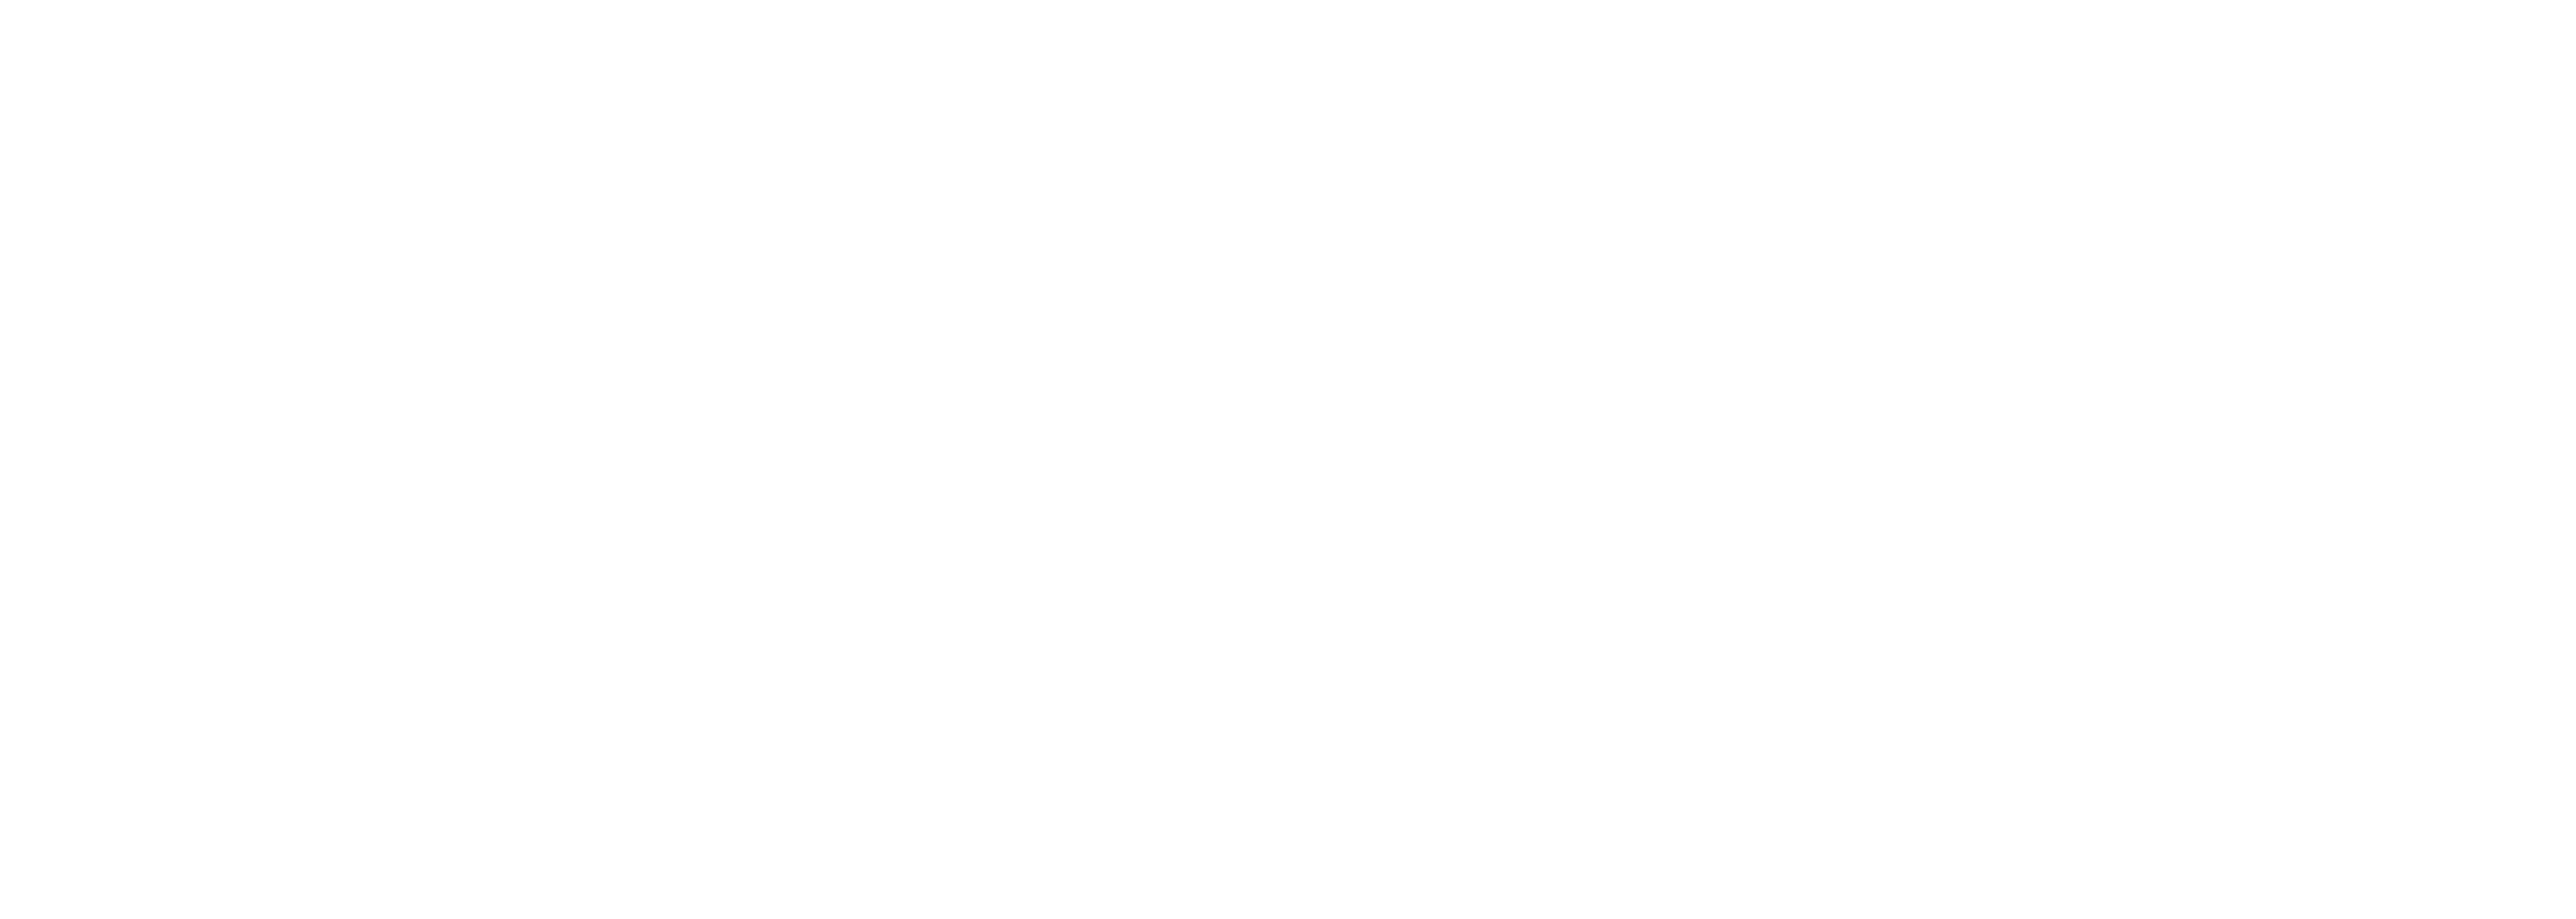 Poison Ivy Logo - Potluck & Poison Ivy – Southern Storytelling